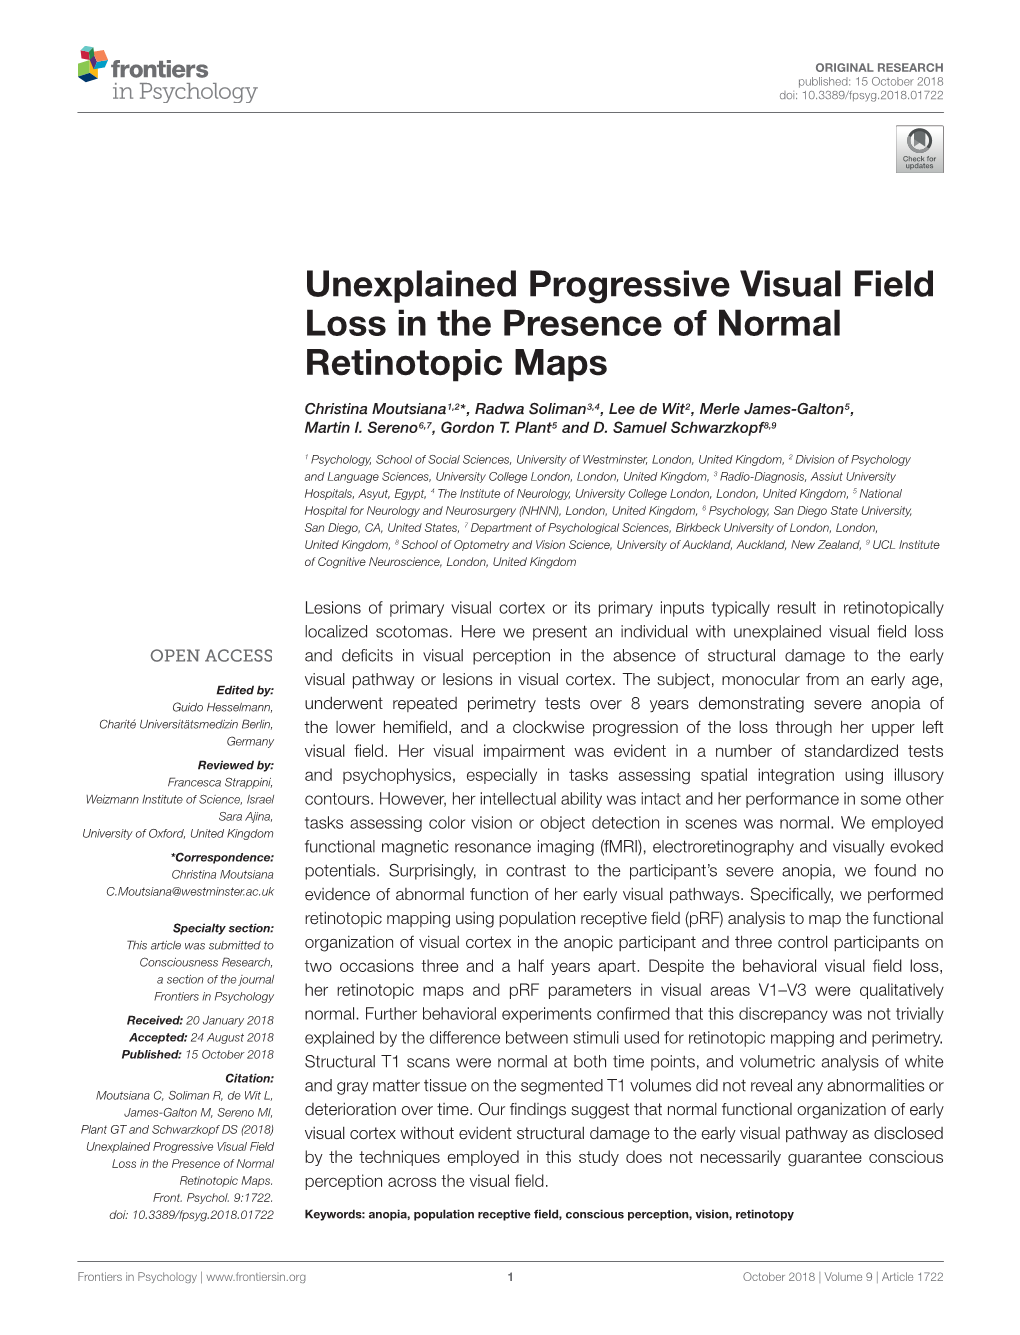 Unexplained Progressive Visual Field Loss in the Presence of Normal Retinotopic Maps